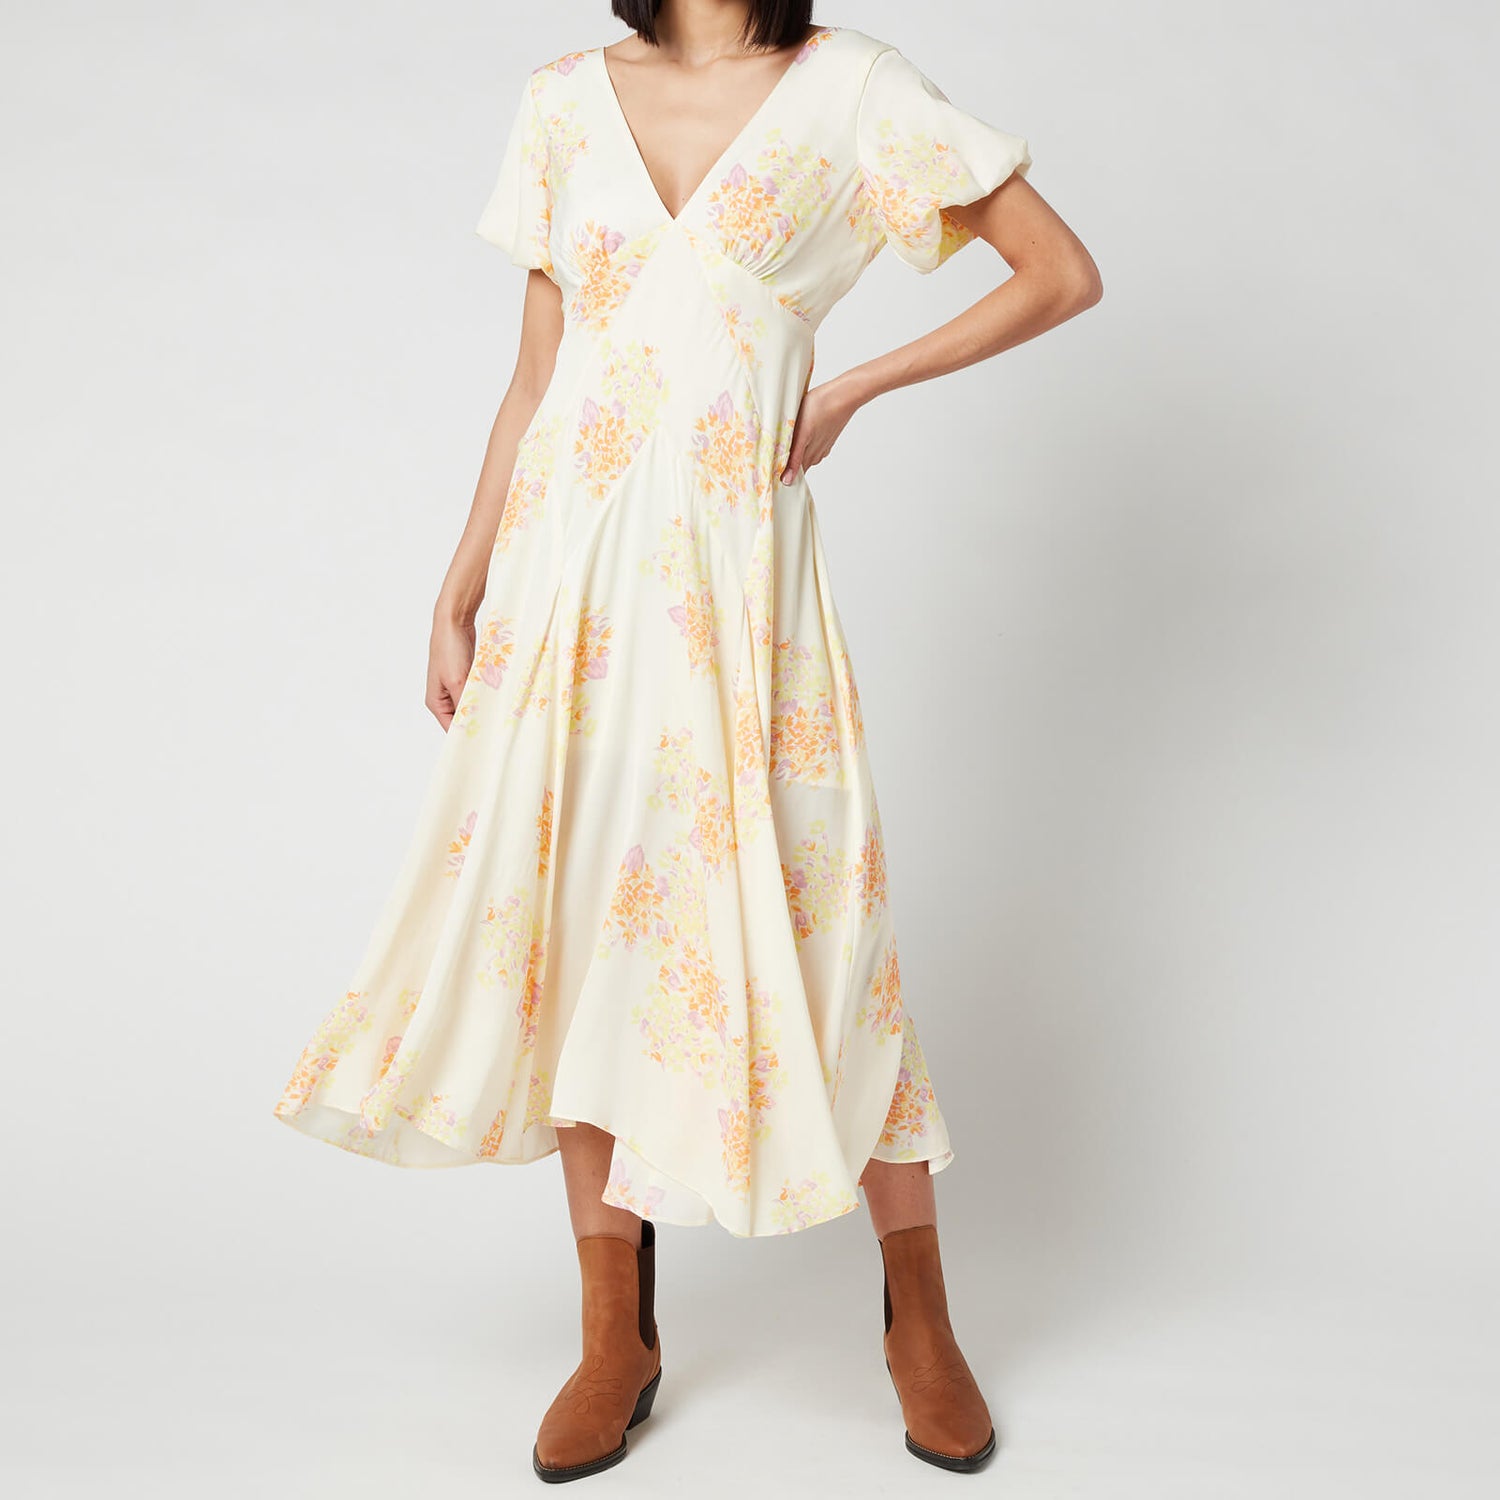 Free People Women's Laura Printed Maxi Dress - Tea Combo